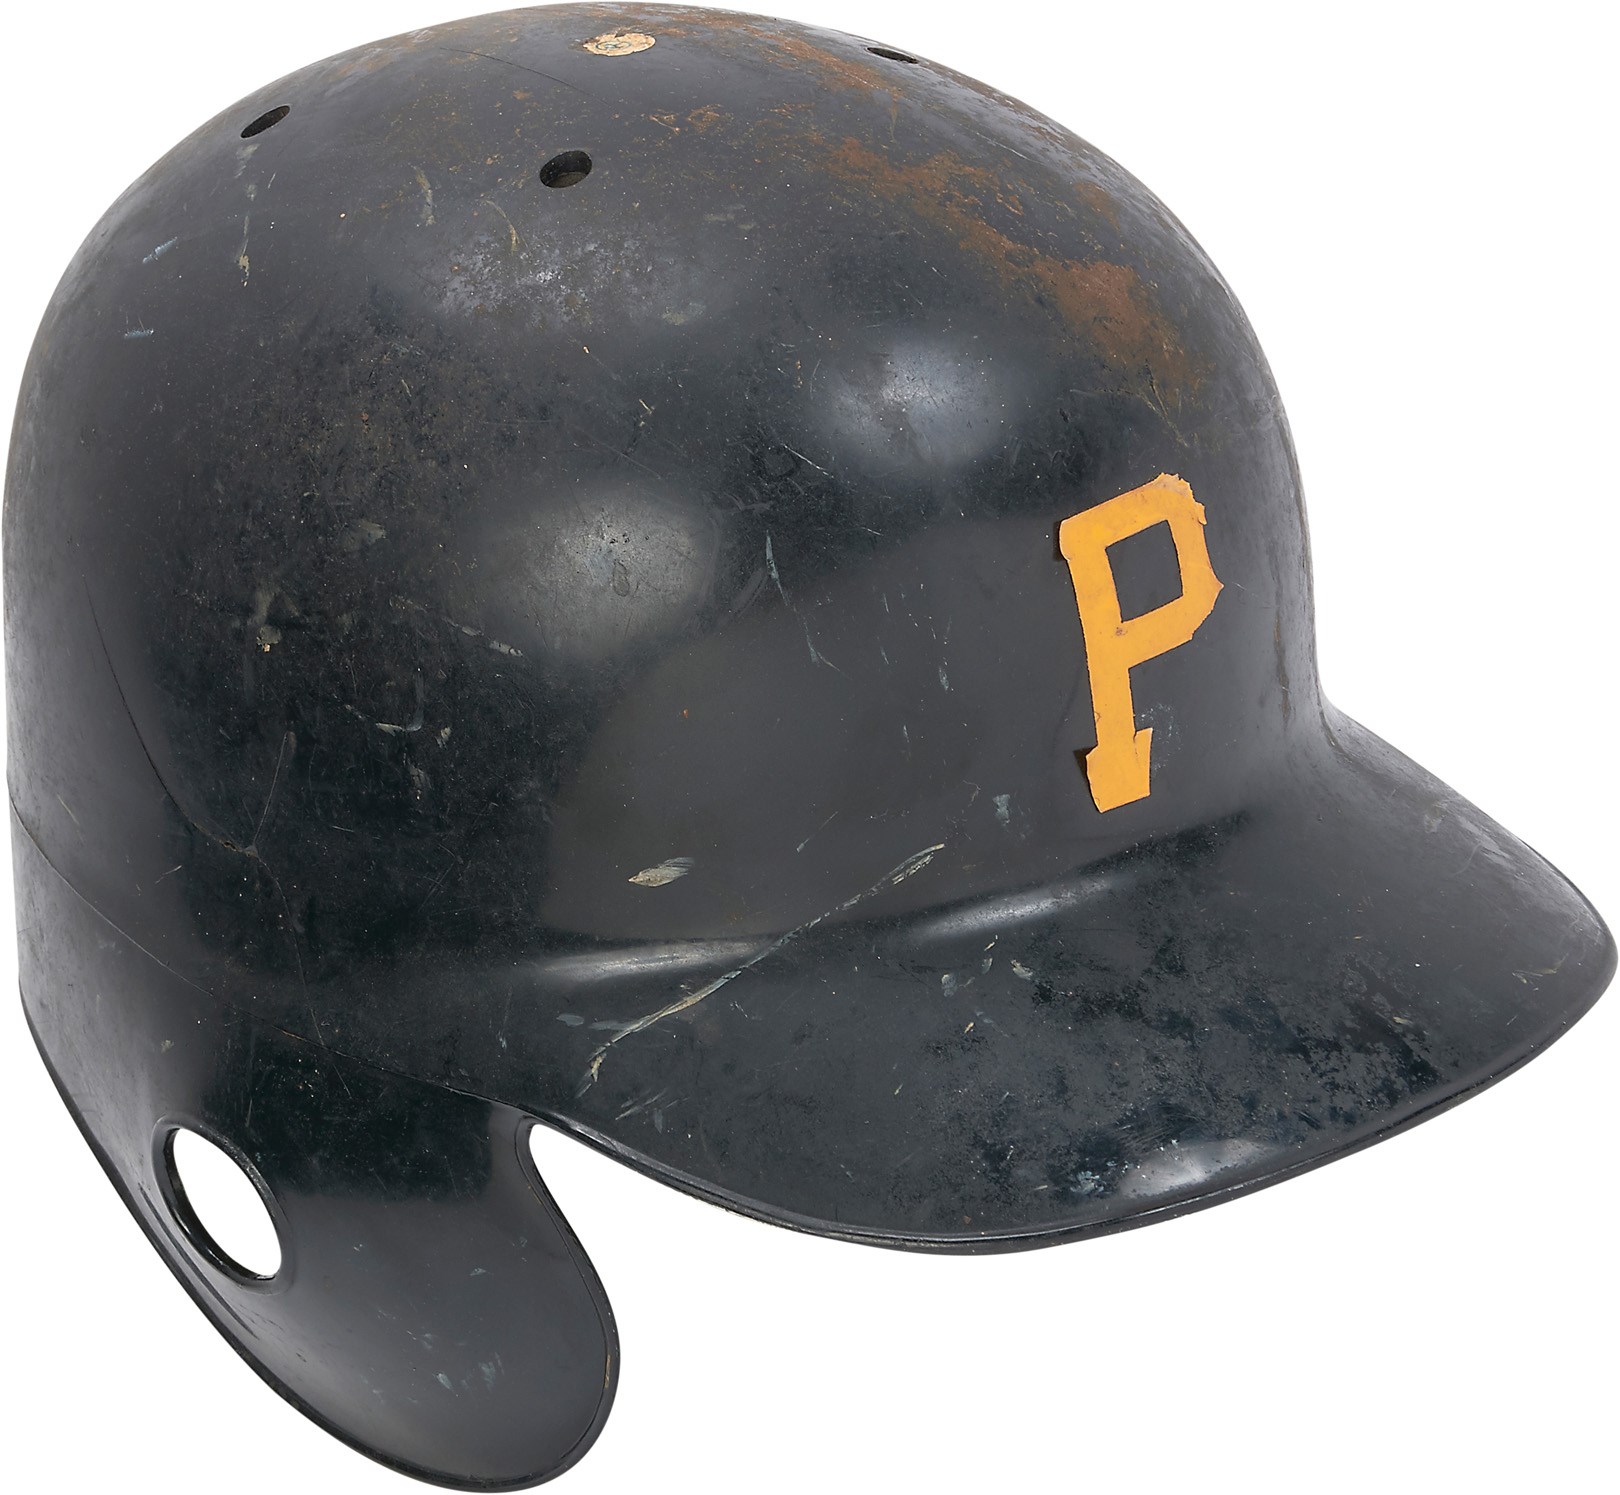 - Circa 1988 Barry Bonds Game Worn Pittsburgh Pirates Helmet